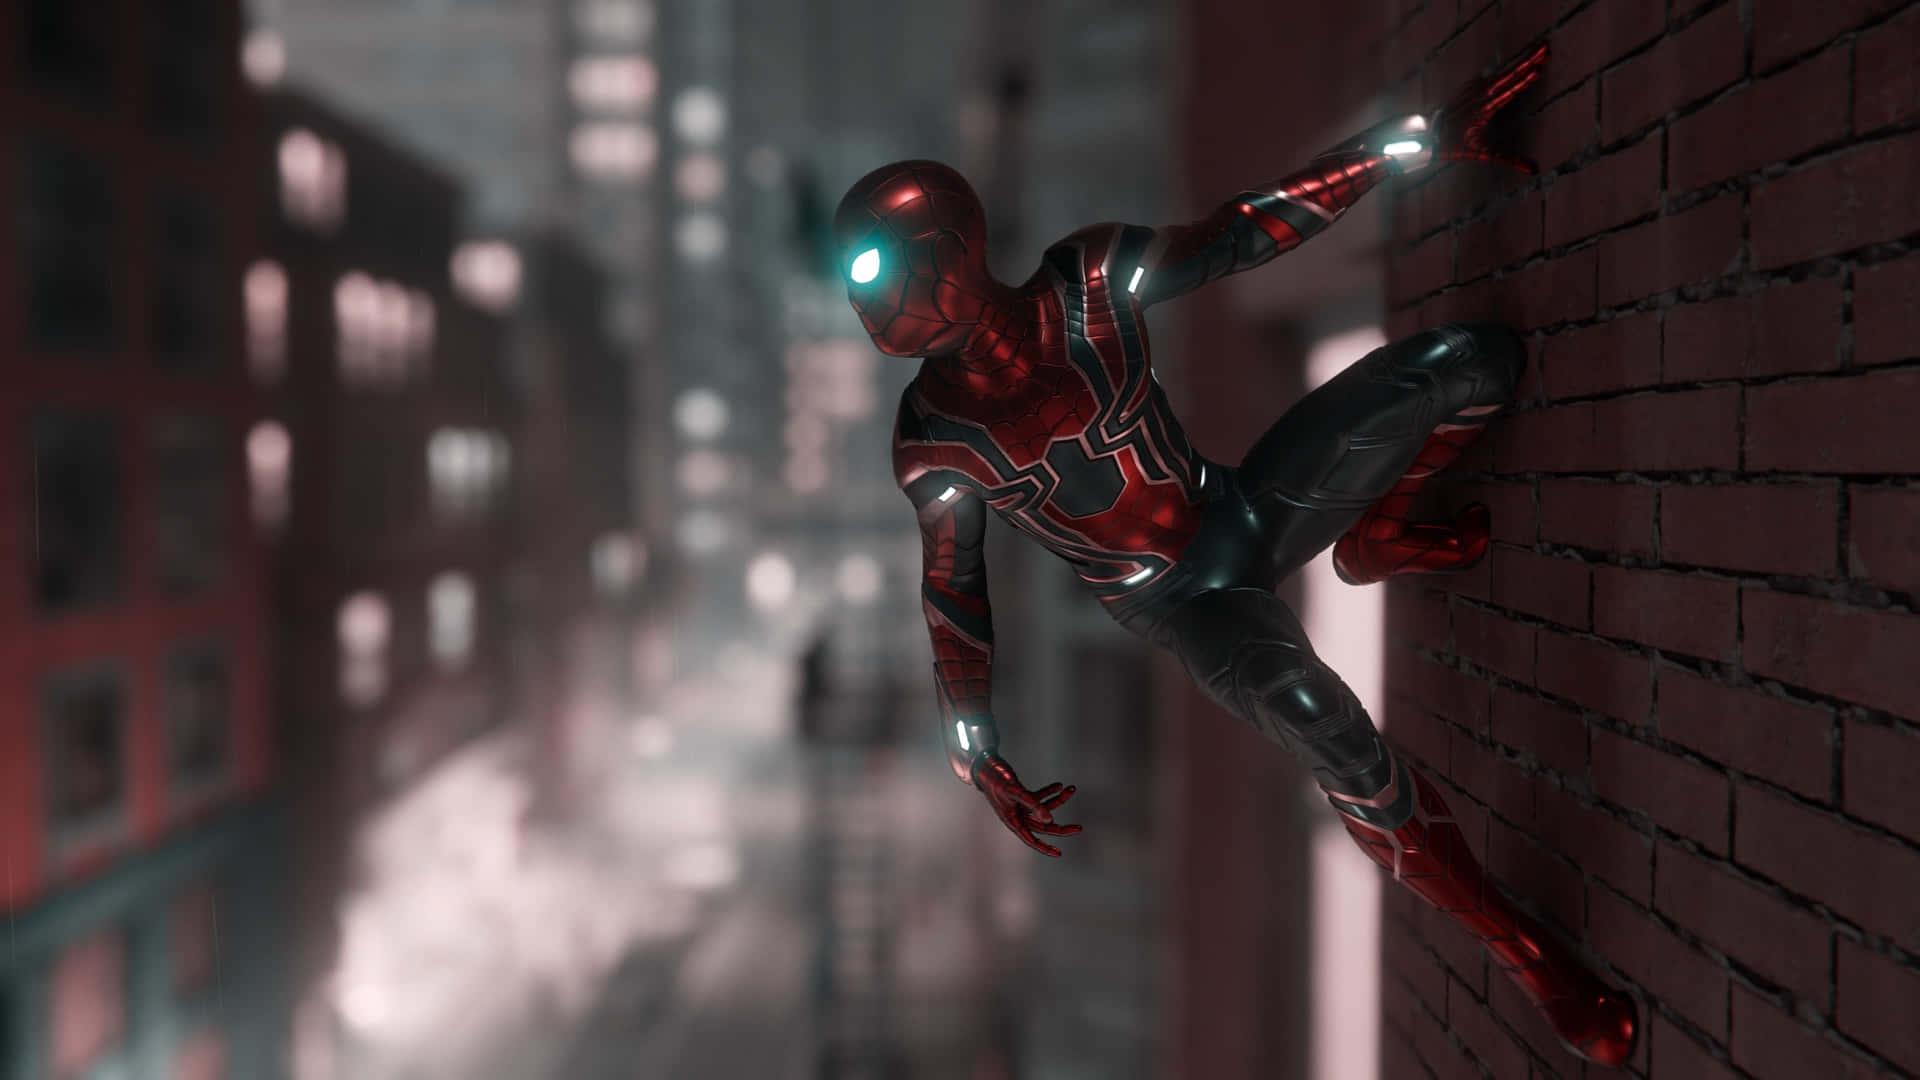 Fondosde Pantalla De Spider-man Ps4 En 4k, Colgado En Edificios. Fondo de pantalla